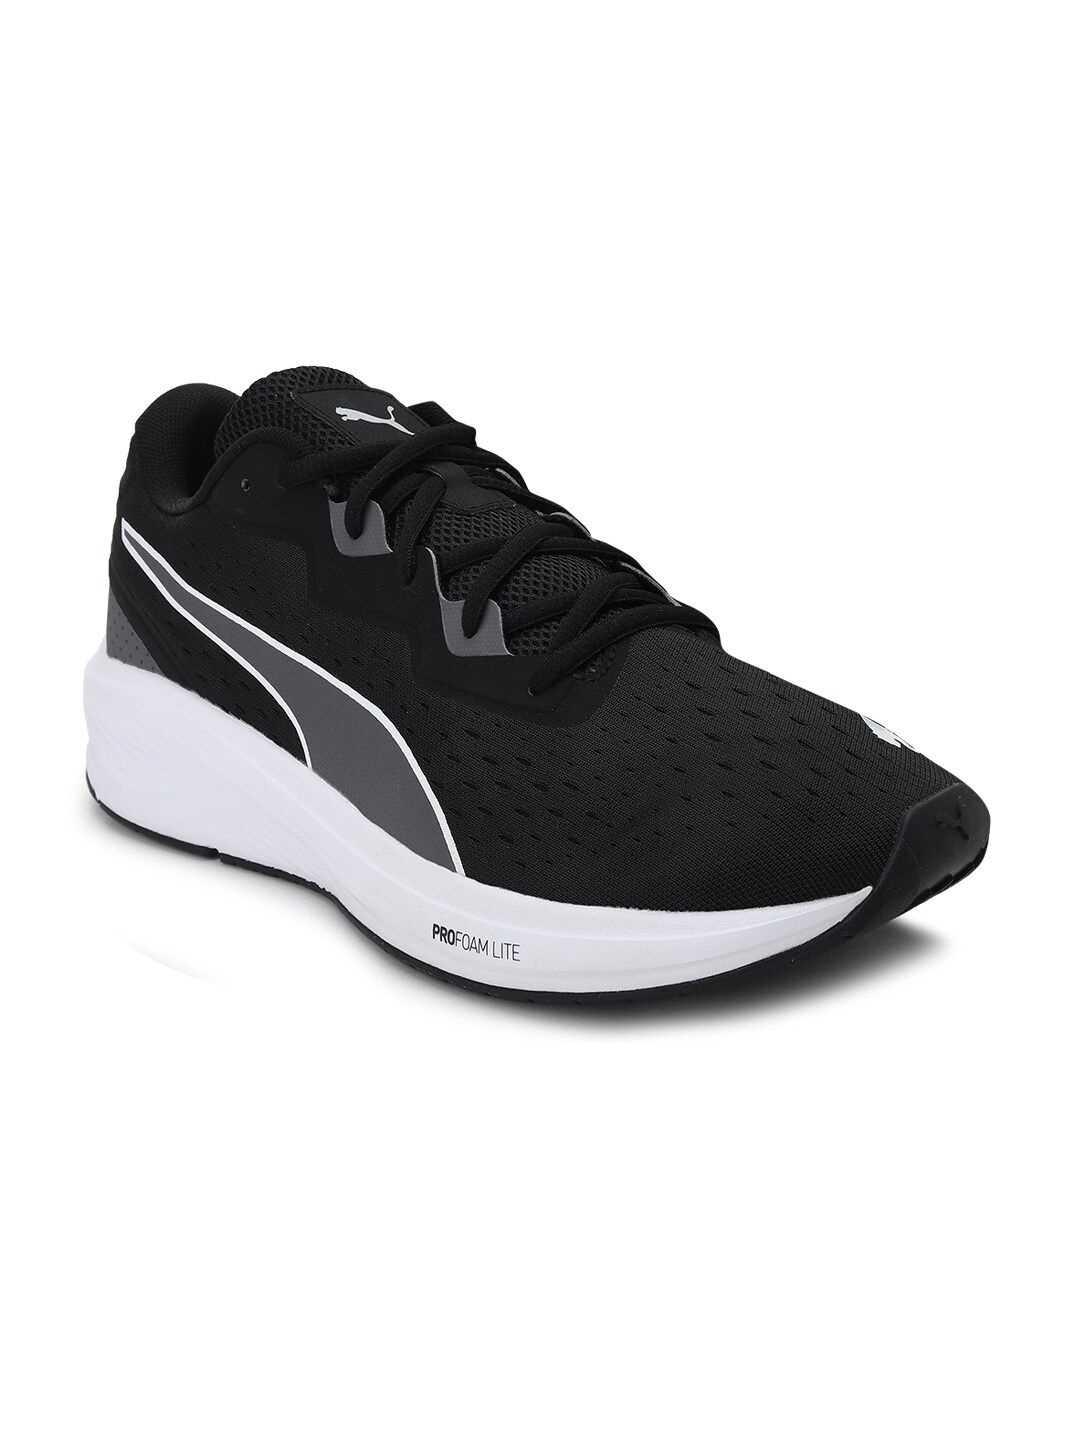 Puma Unisex Black & White Textile Running Shoes Price in India